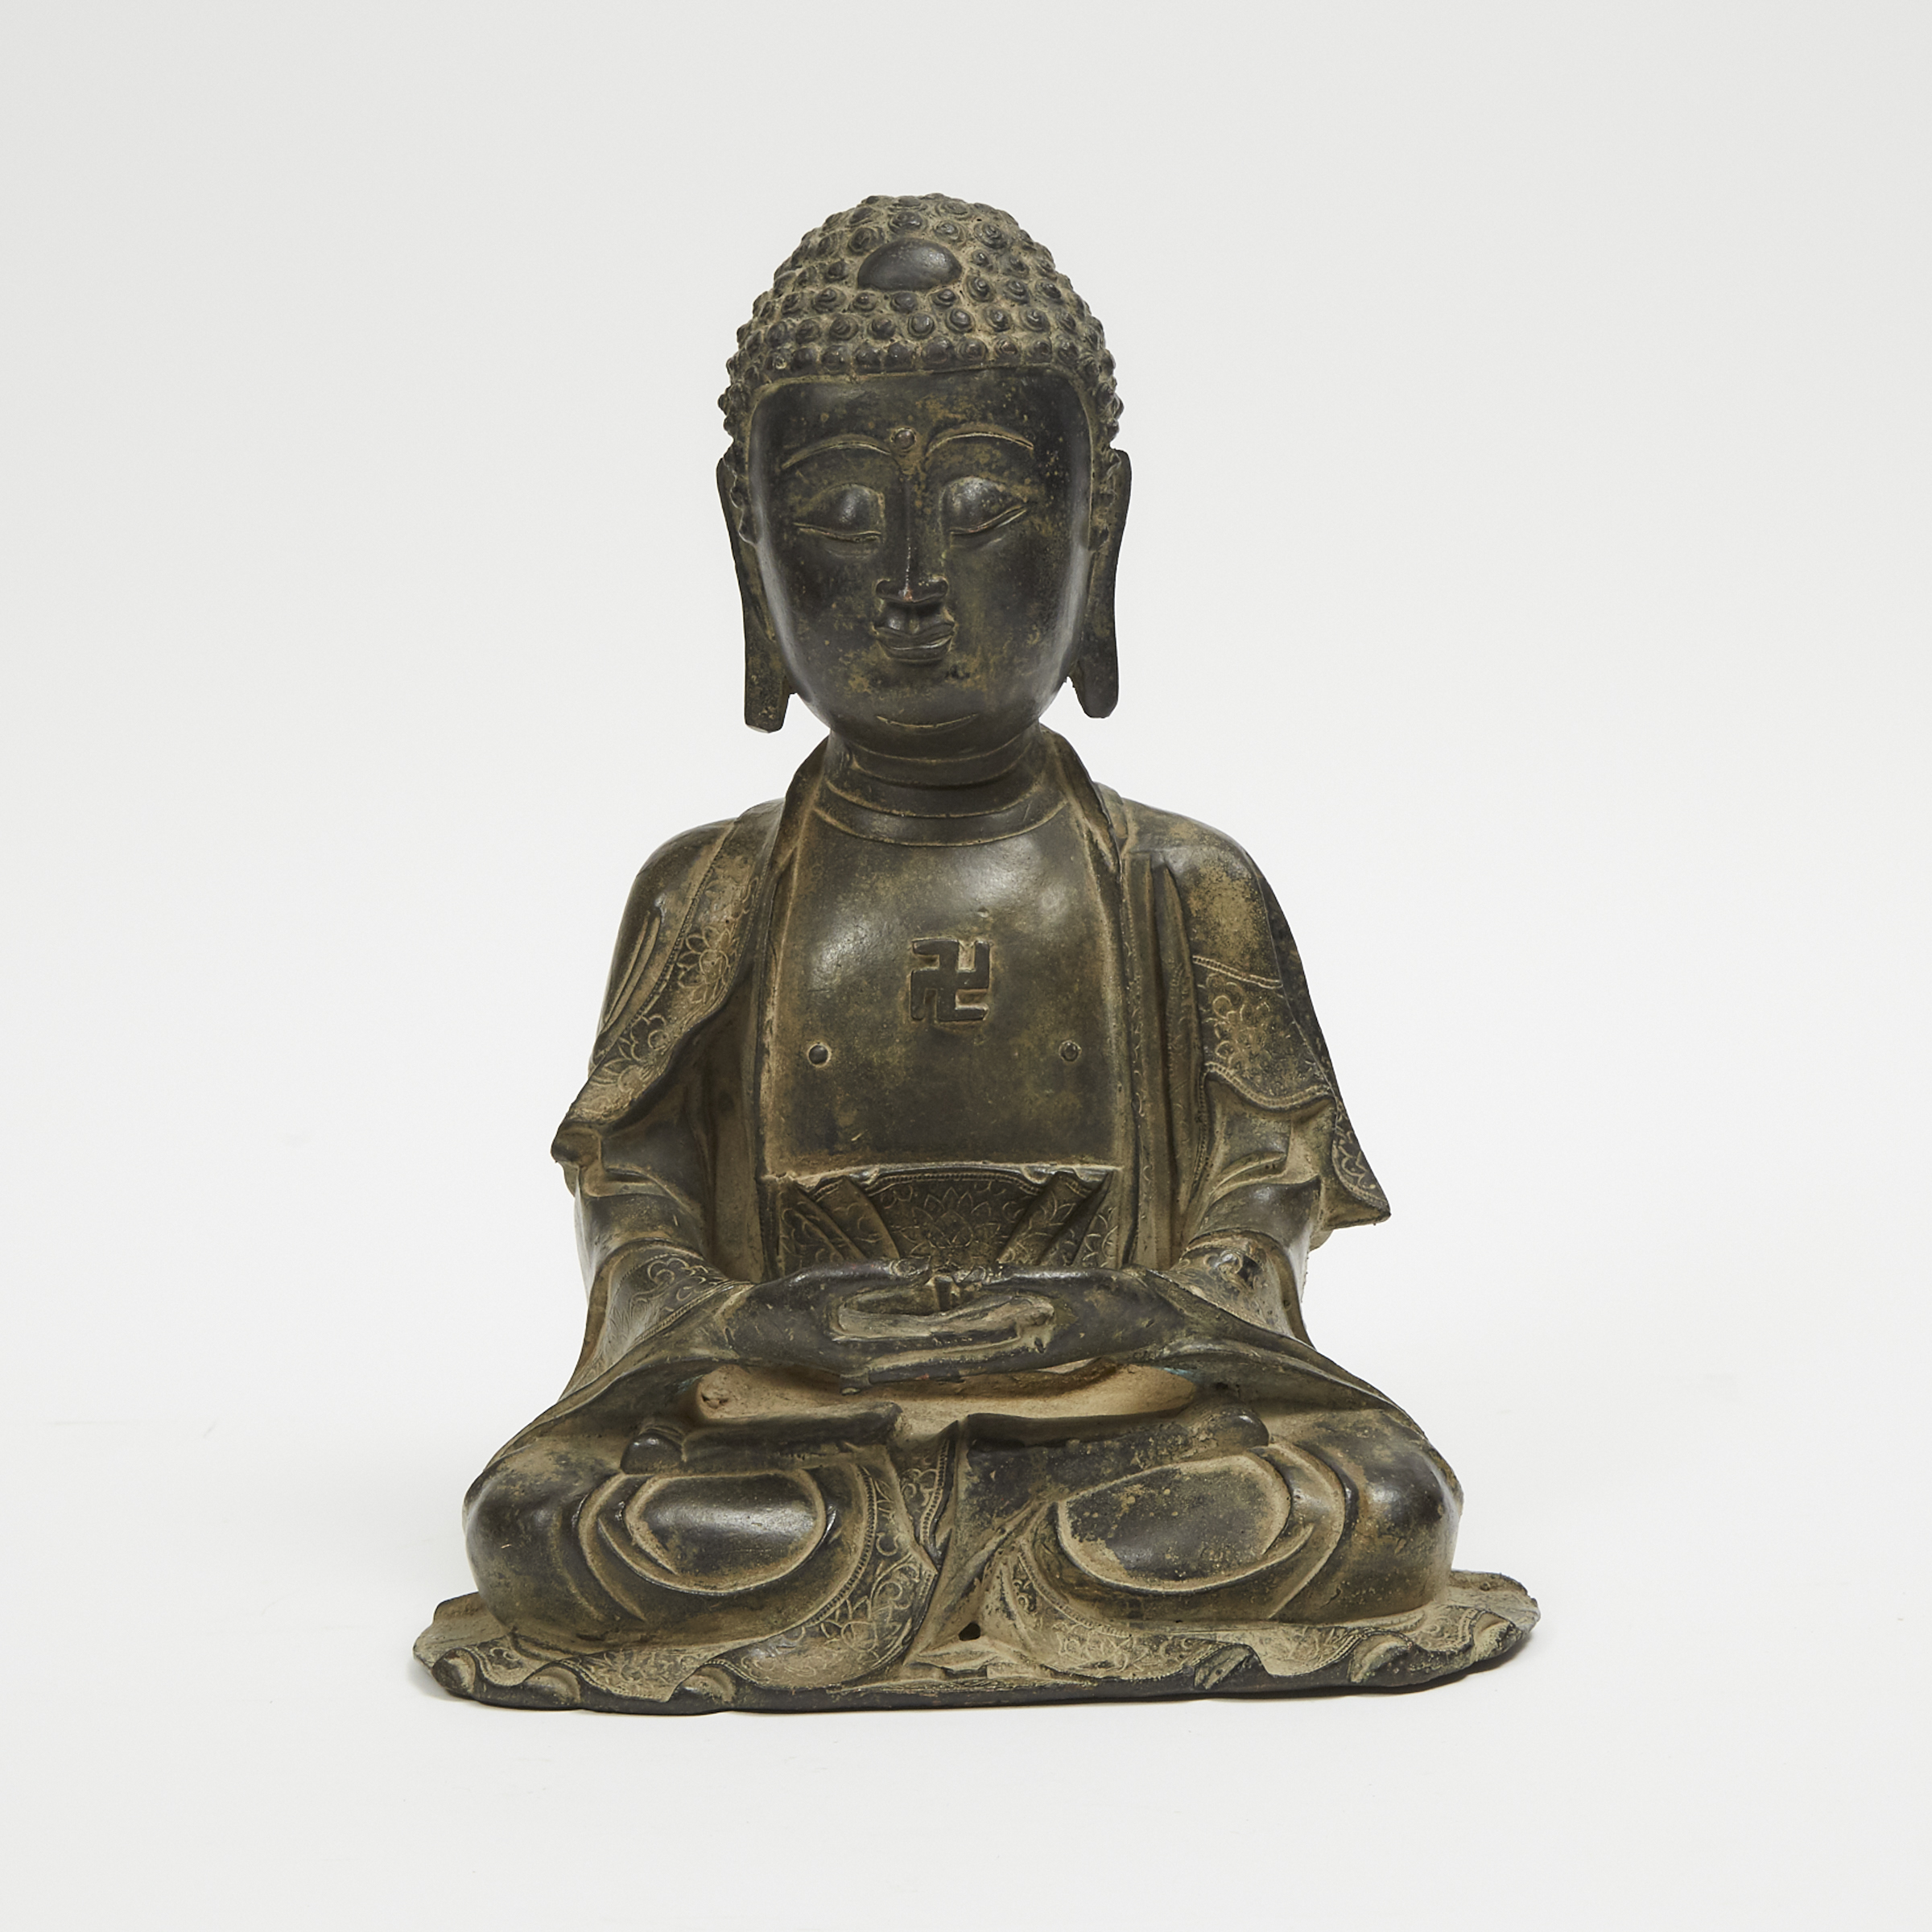 A Bronze Seated Buddha Figure, 17th Century